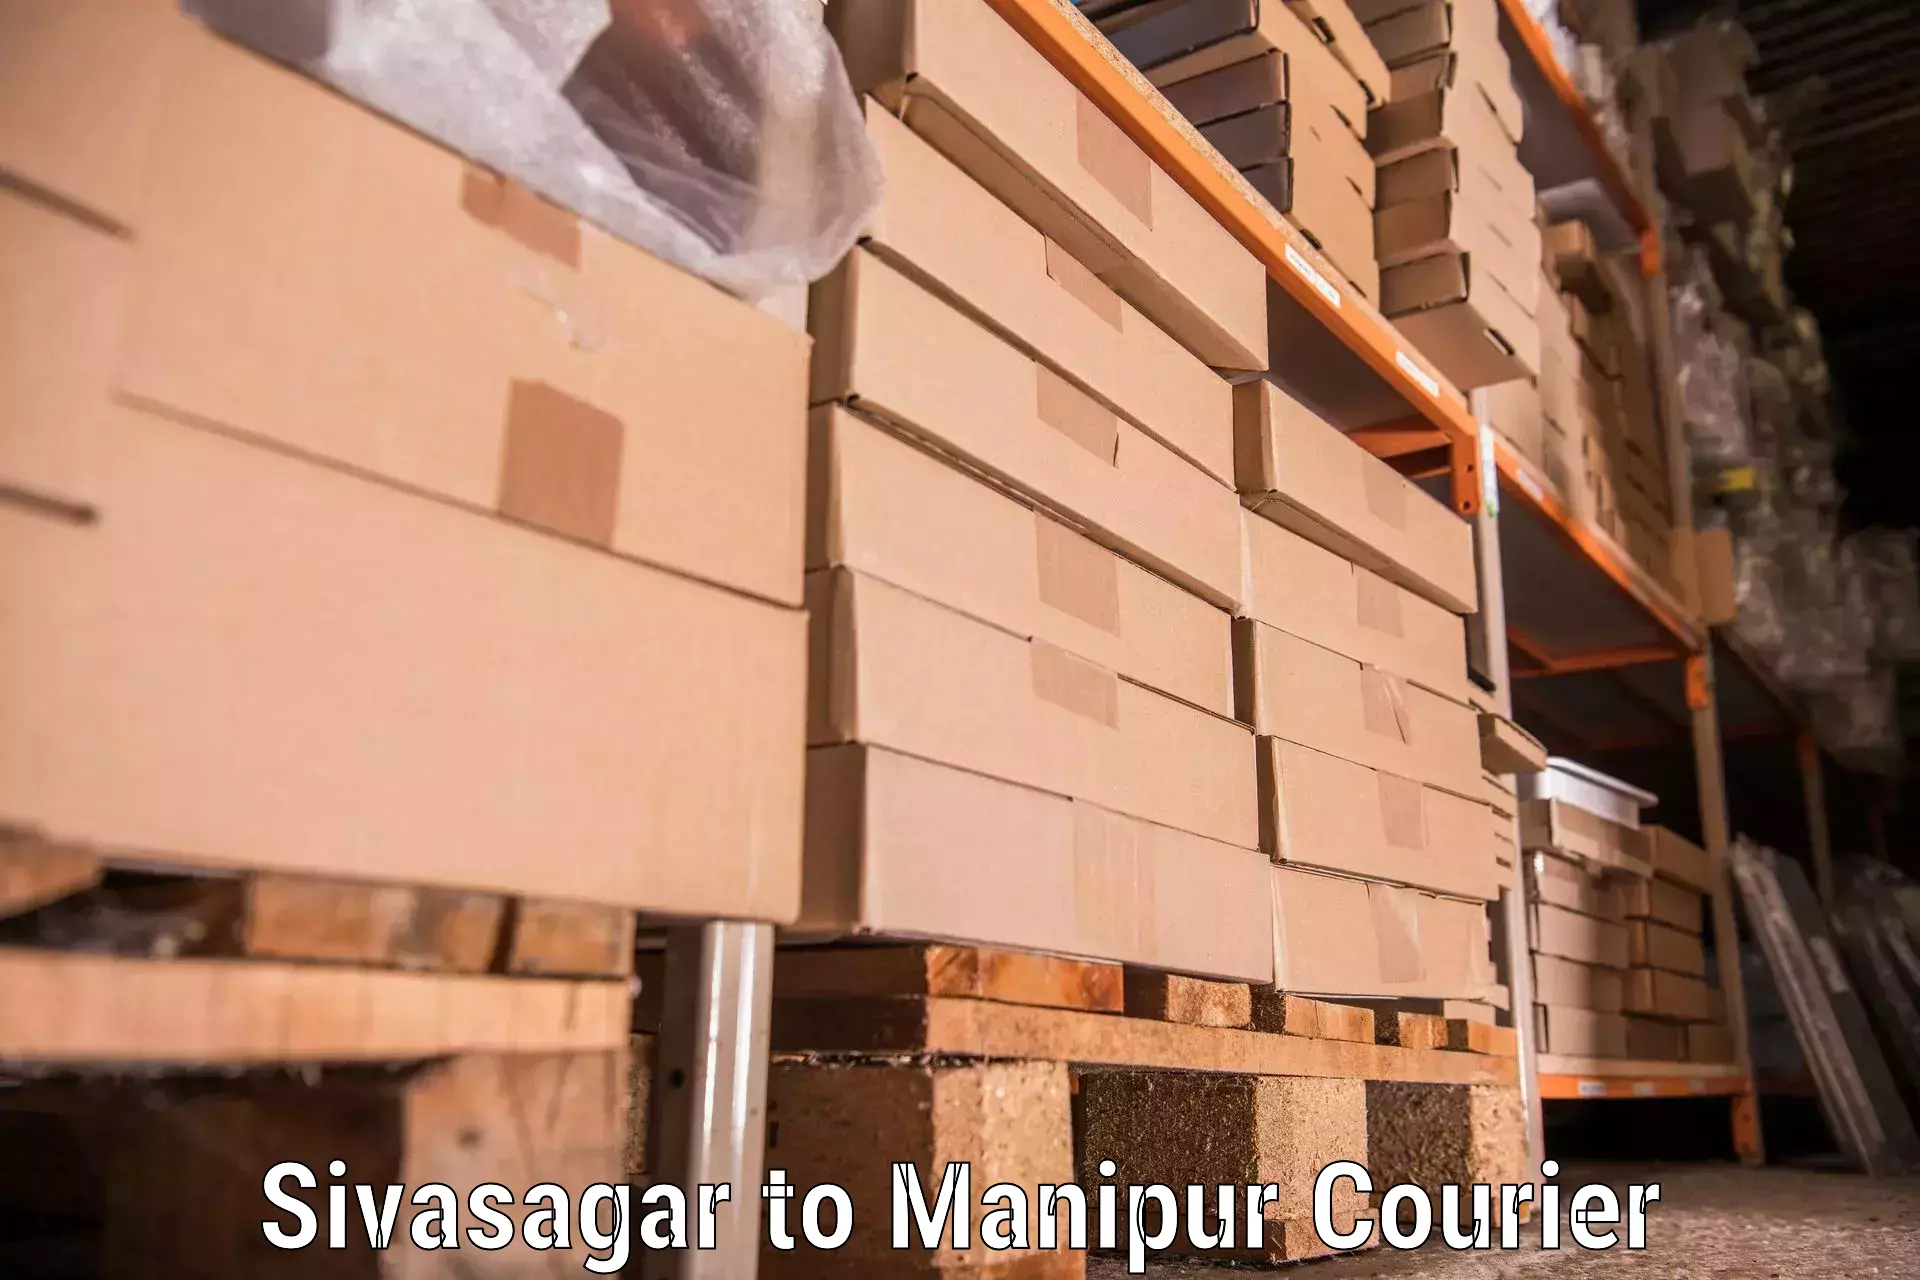 Professional moving company Sivasagar to Chandel